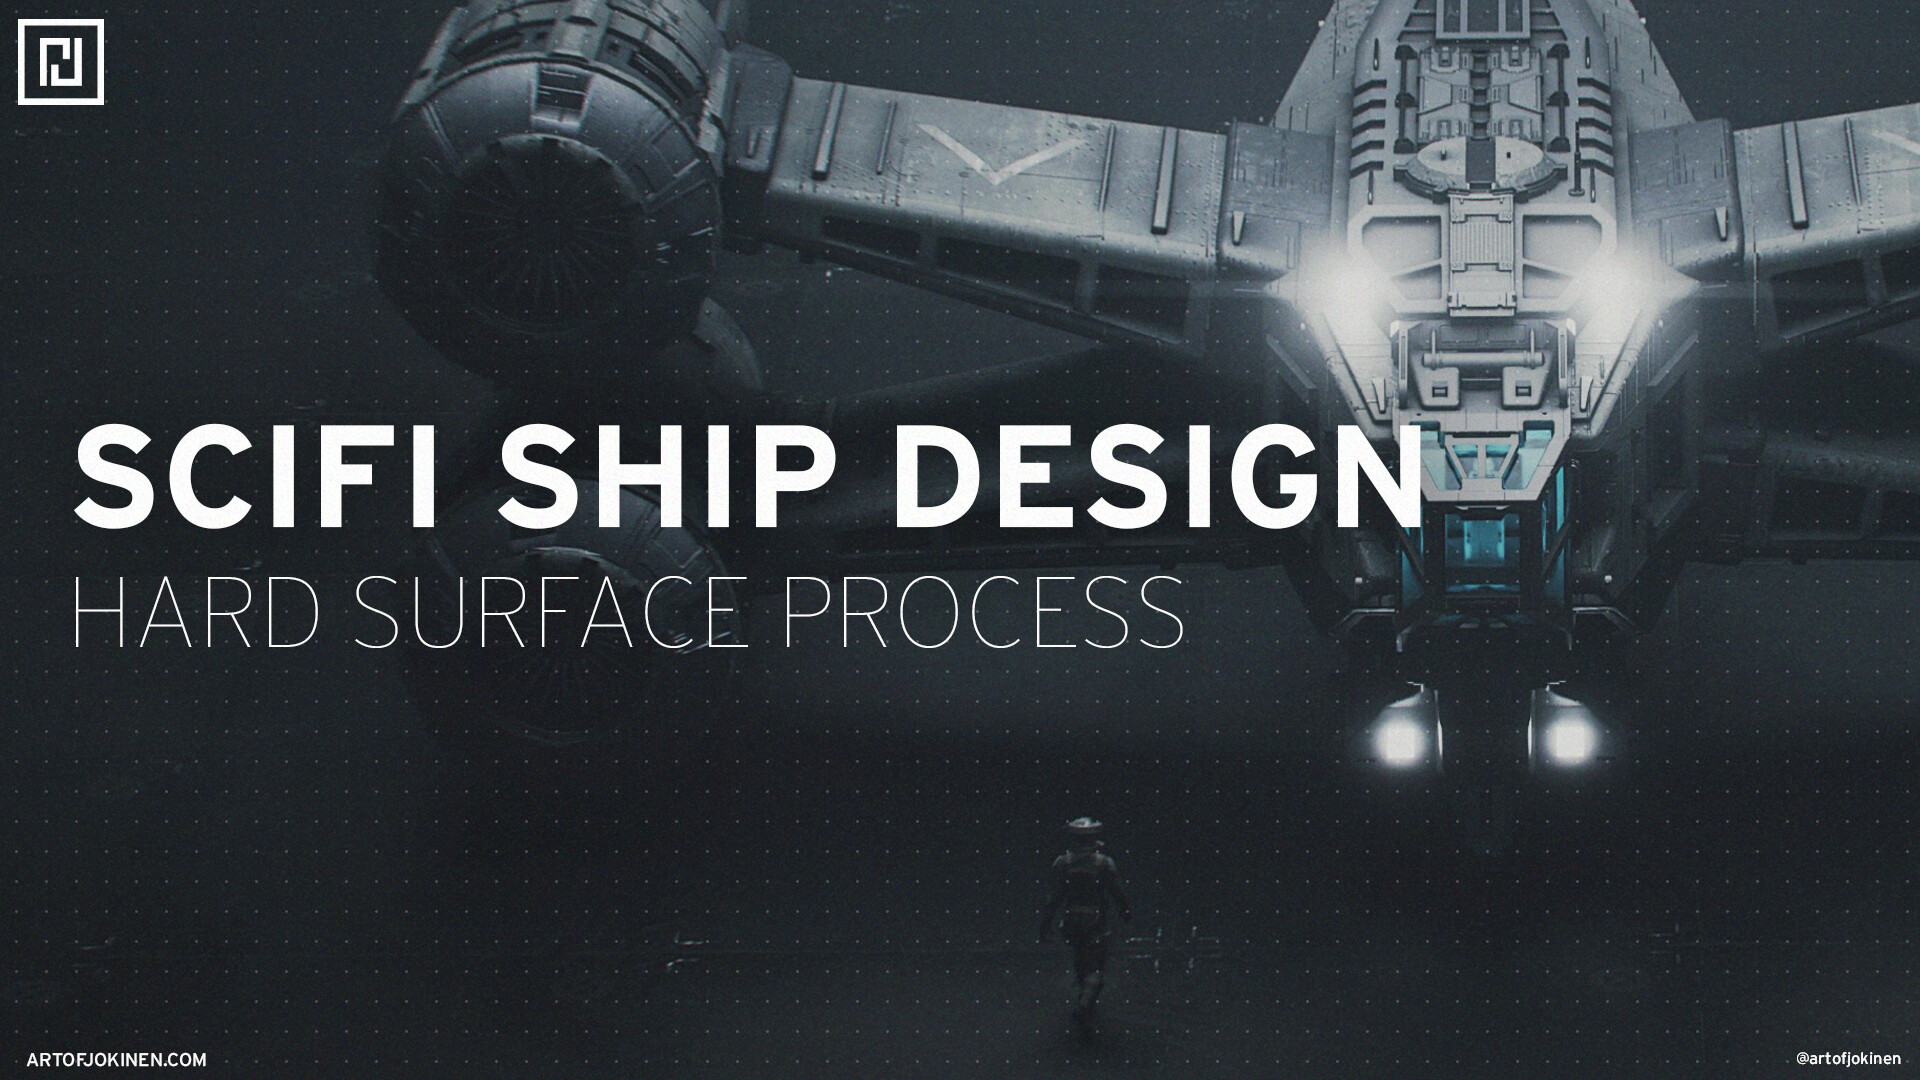 ToughSF: Space Warship Design: A Process